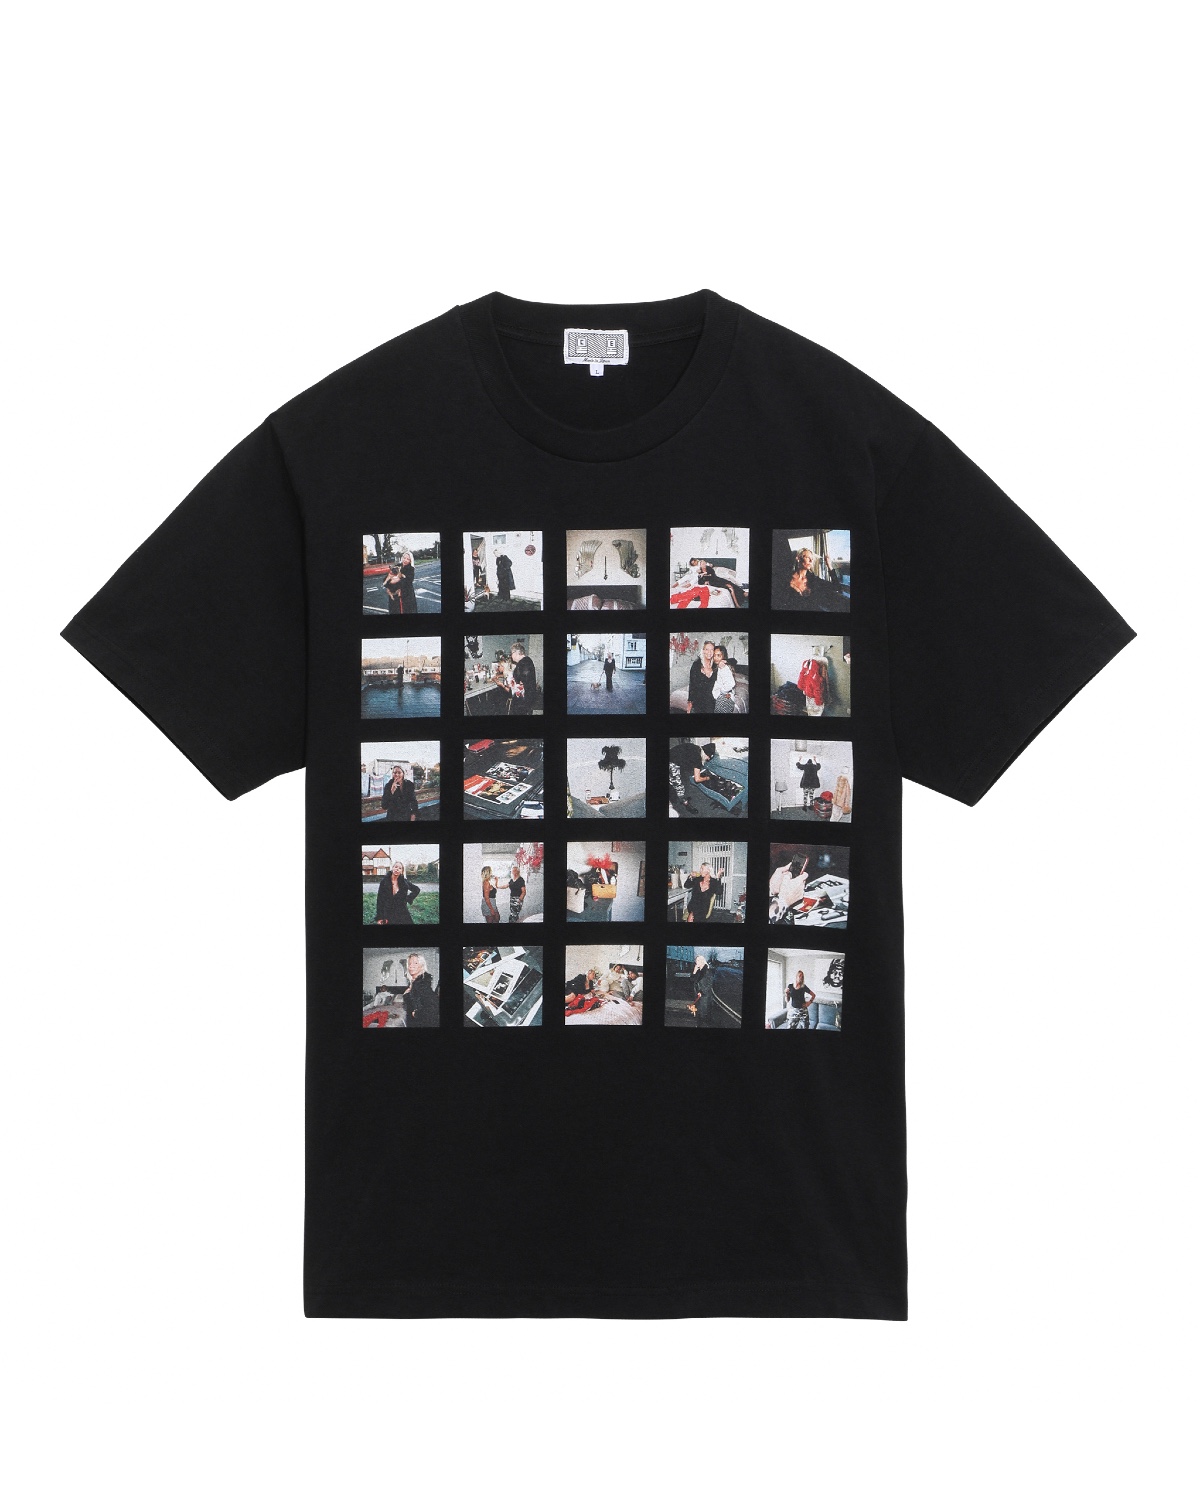 C.E」× DJ ジョイ・オービソン Tシャツとソックスを発売 - TOKION